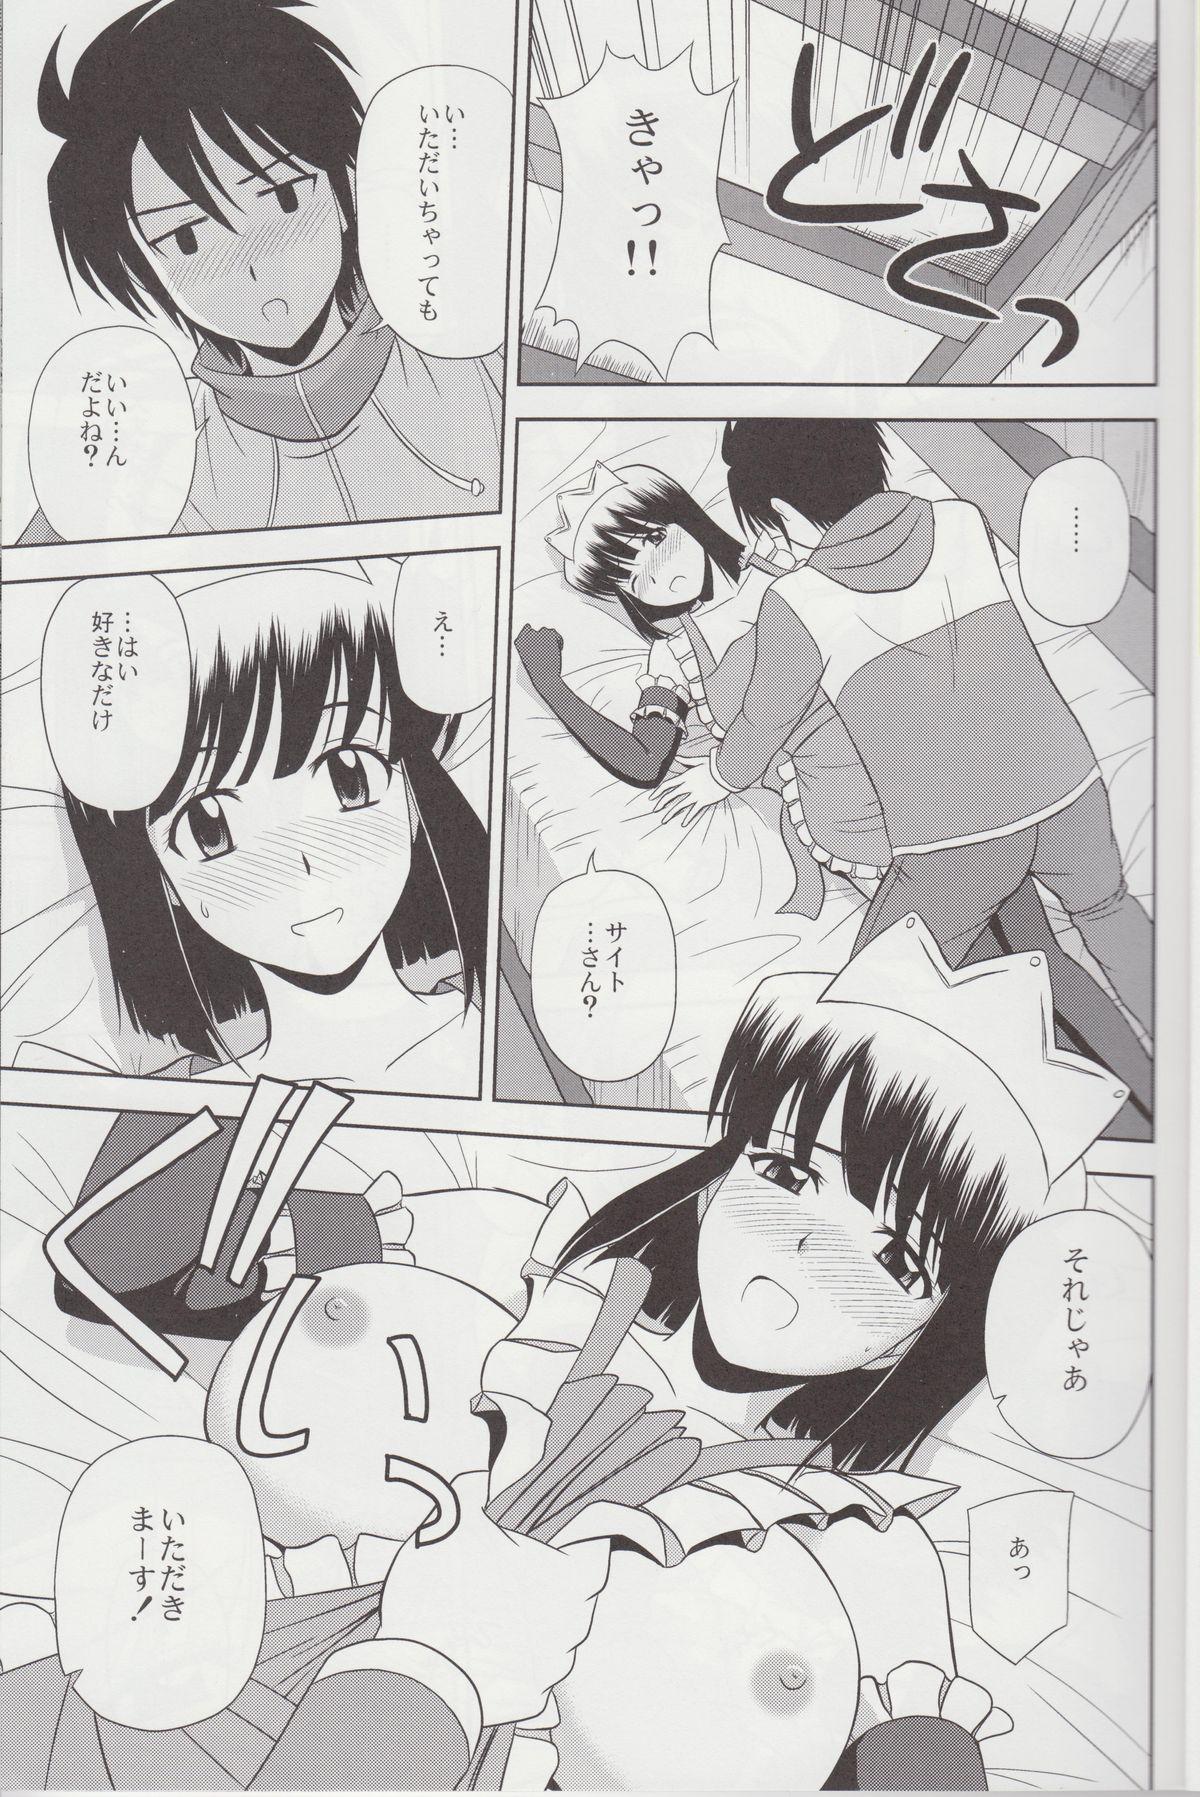 Star Le beau maitre 8 - Zero no tsukaima 18 Year Old - Page 10